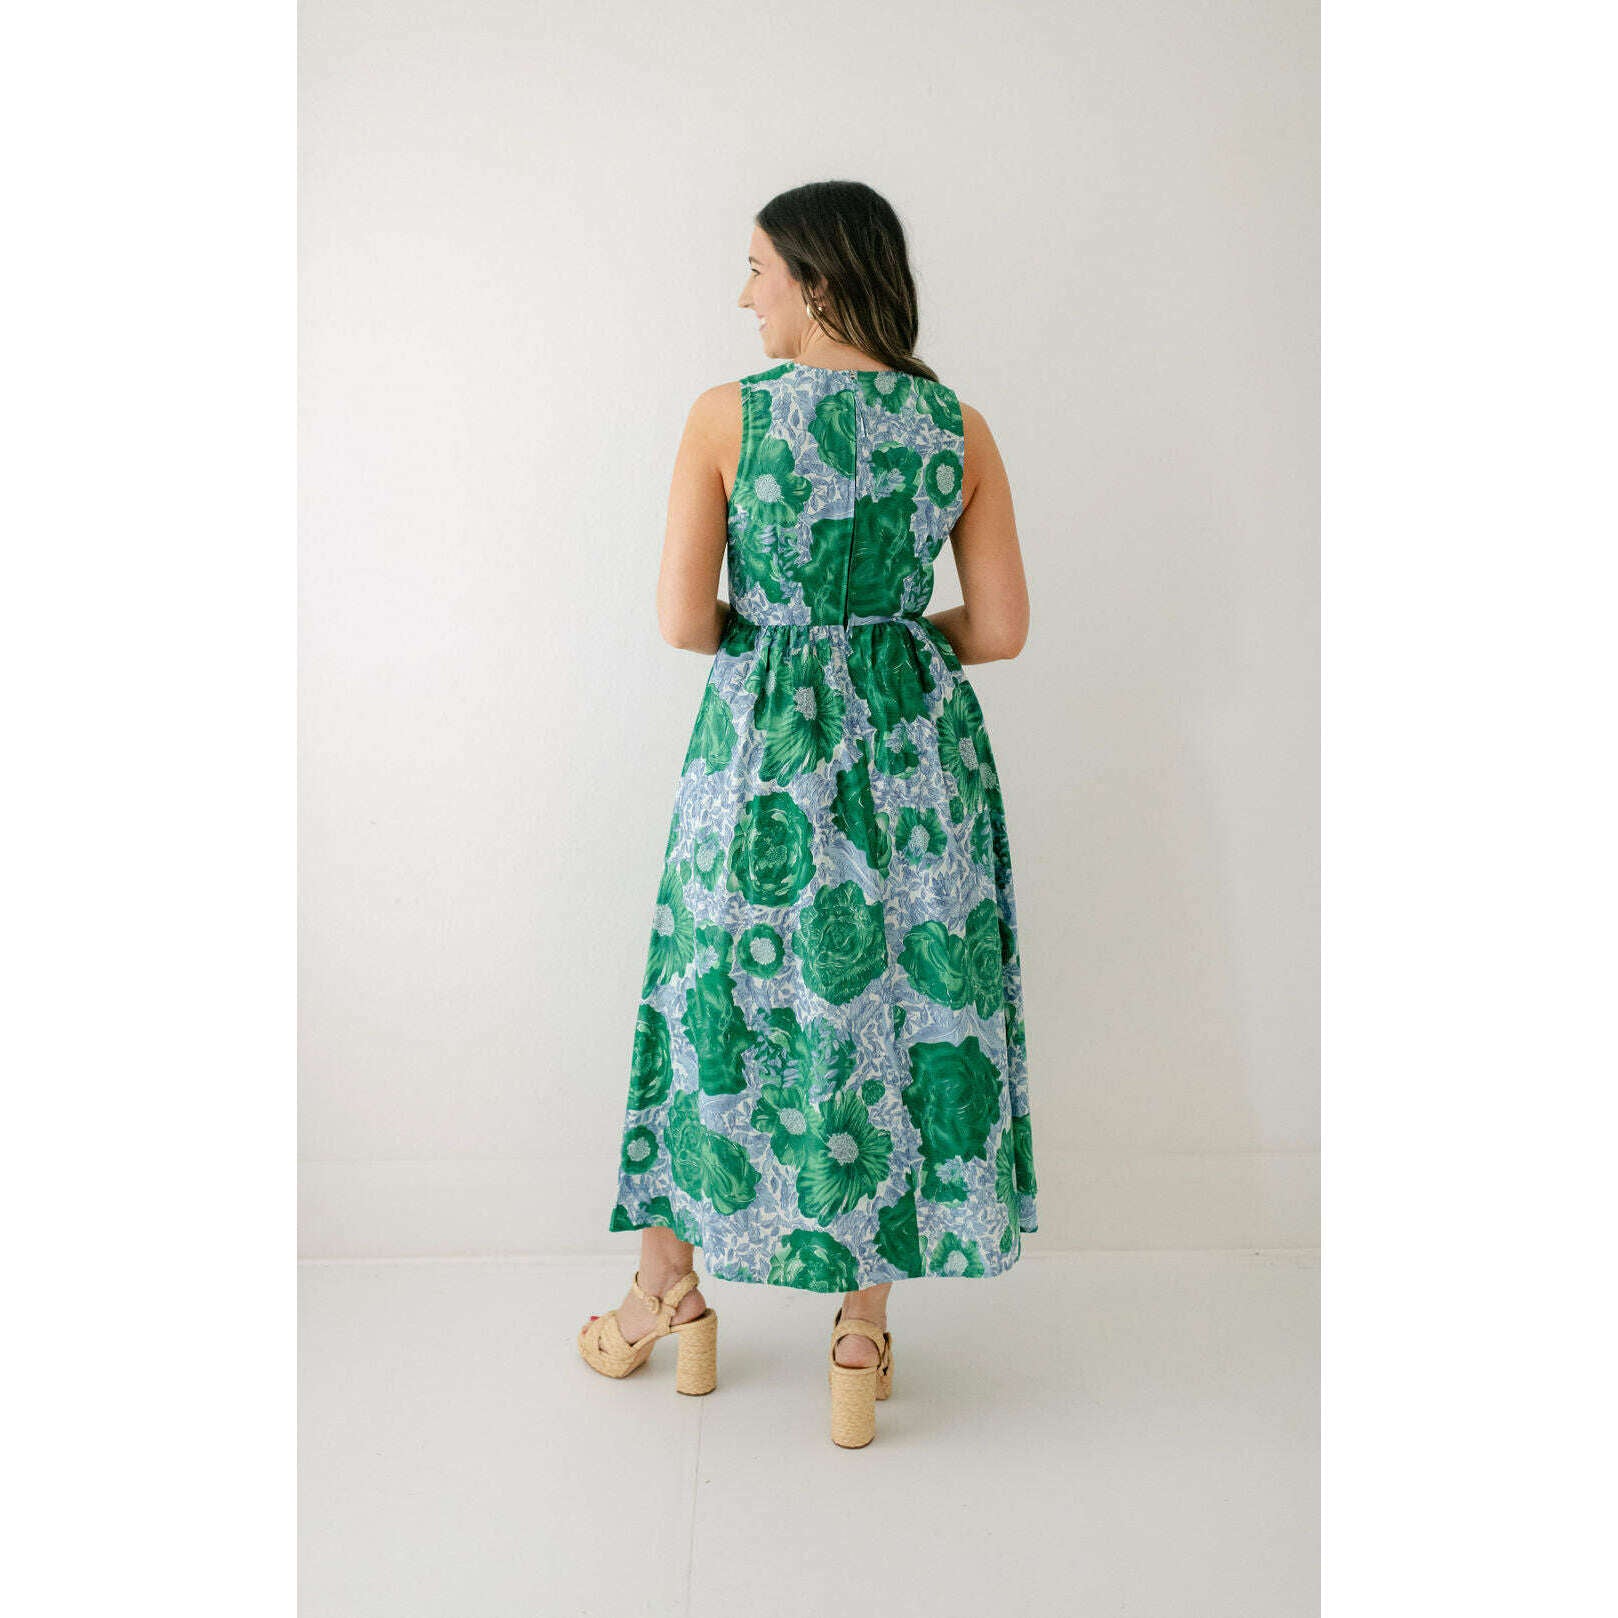 8.28 Boutique:8.28 Boutique,The Sidney Dress in Hydrangea Sky Blue & Green,Dress